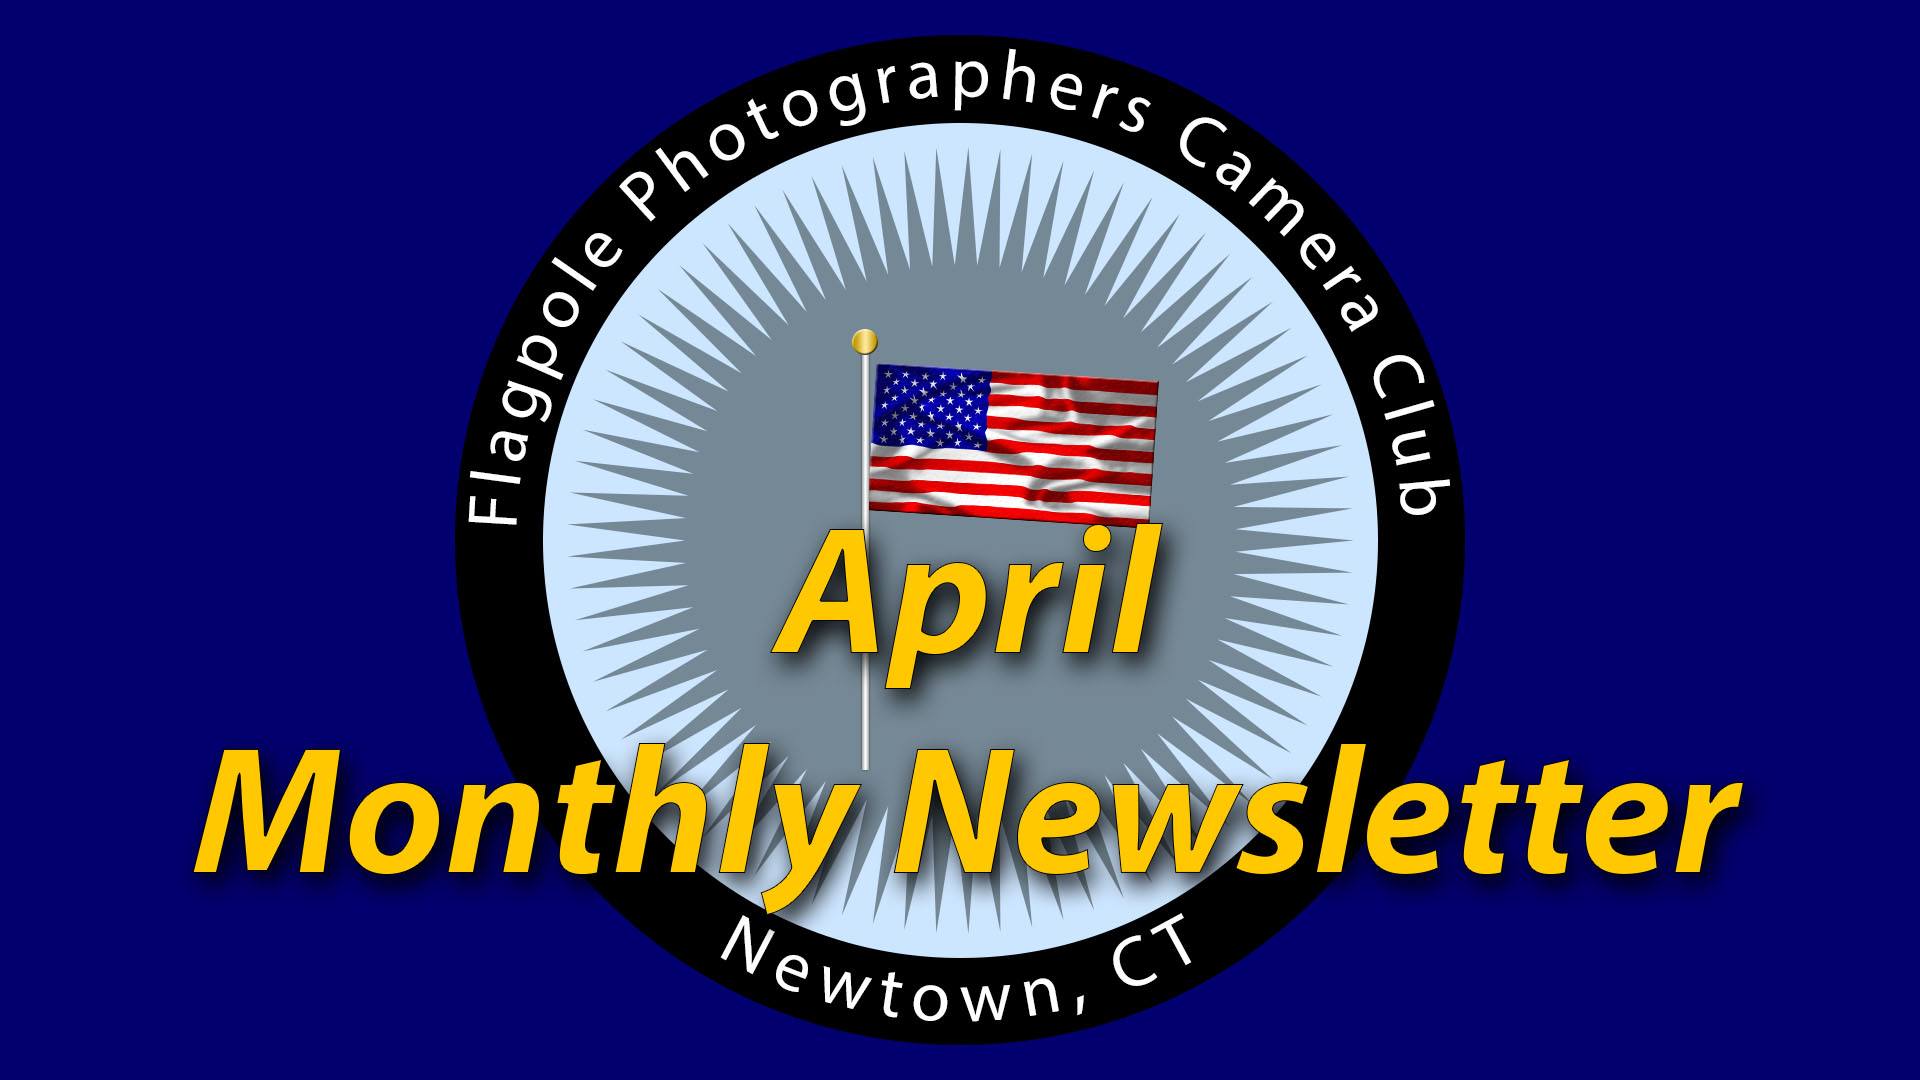 Flagpole Photographers April 2020 Newsletter